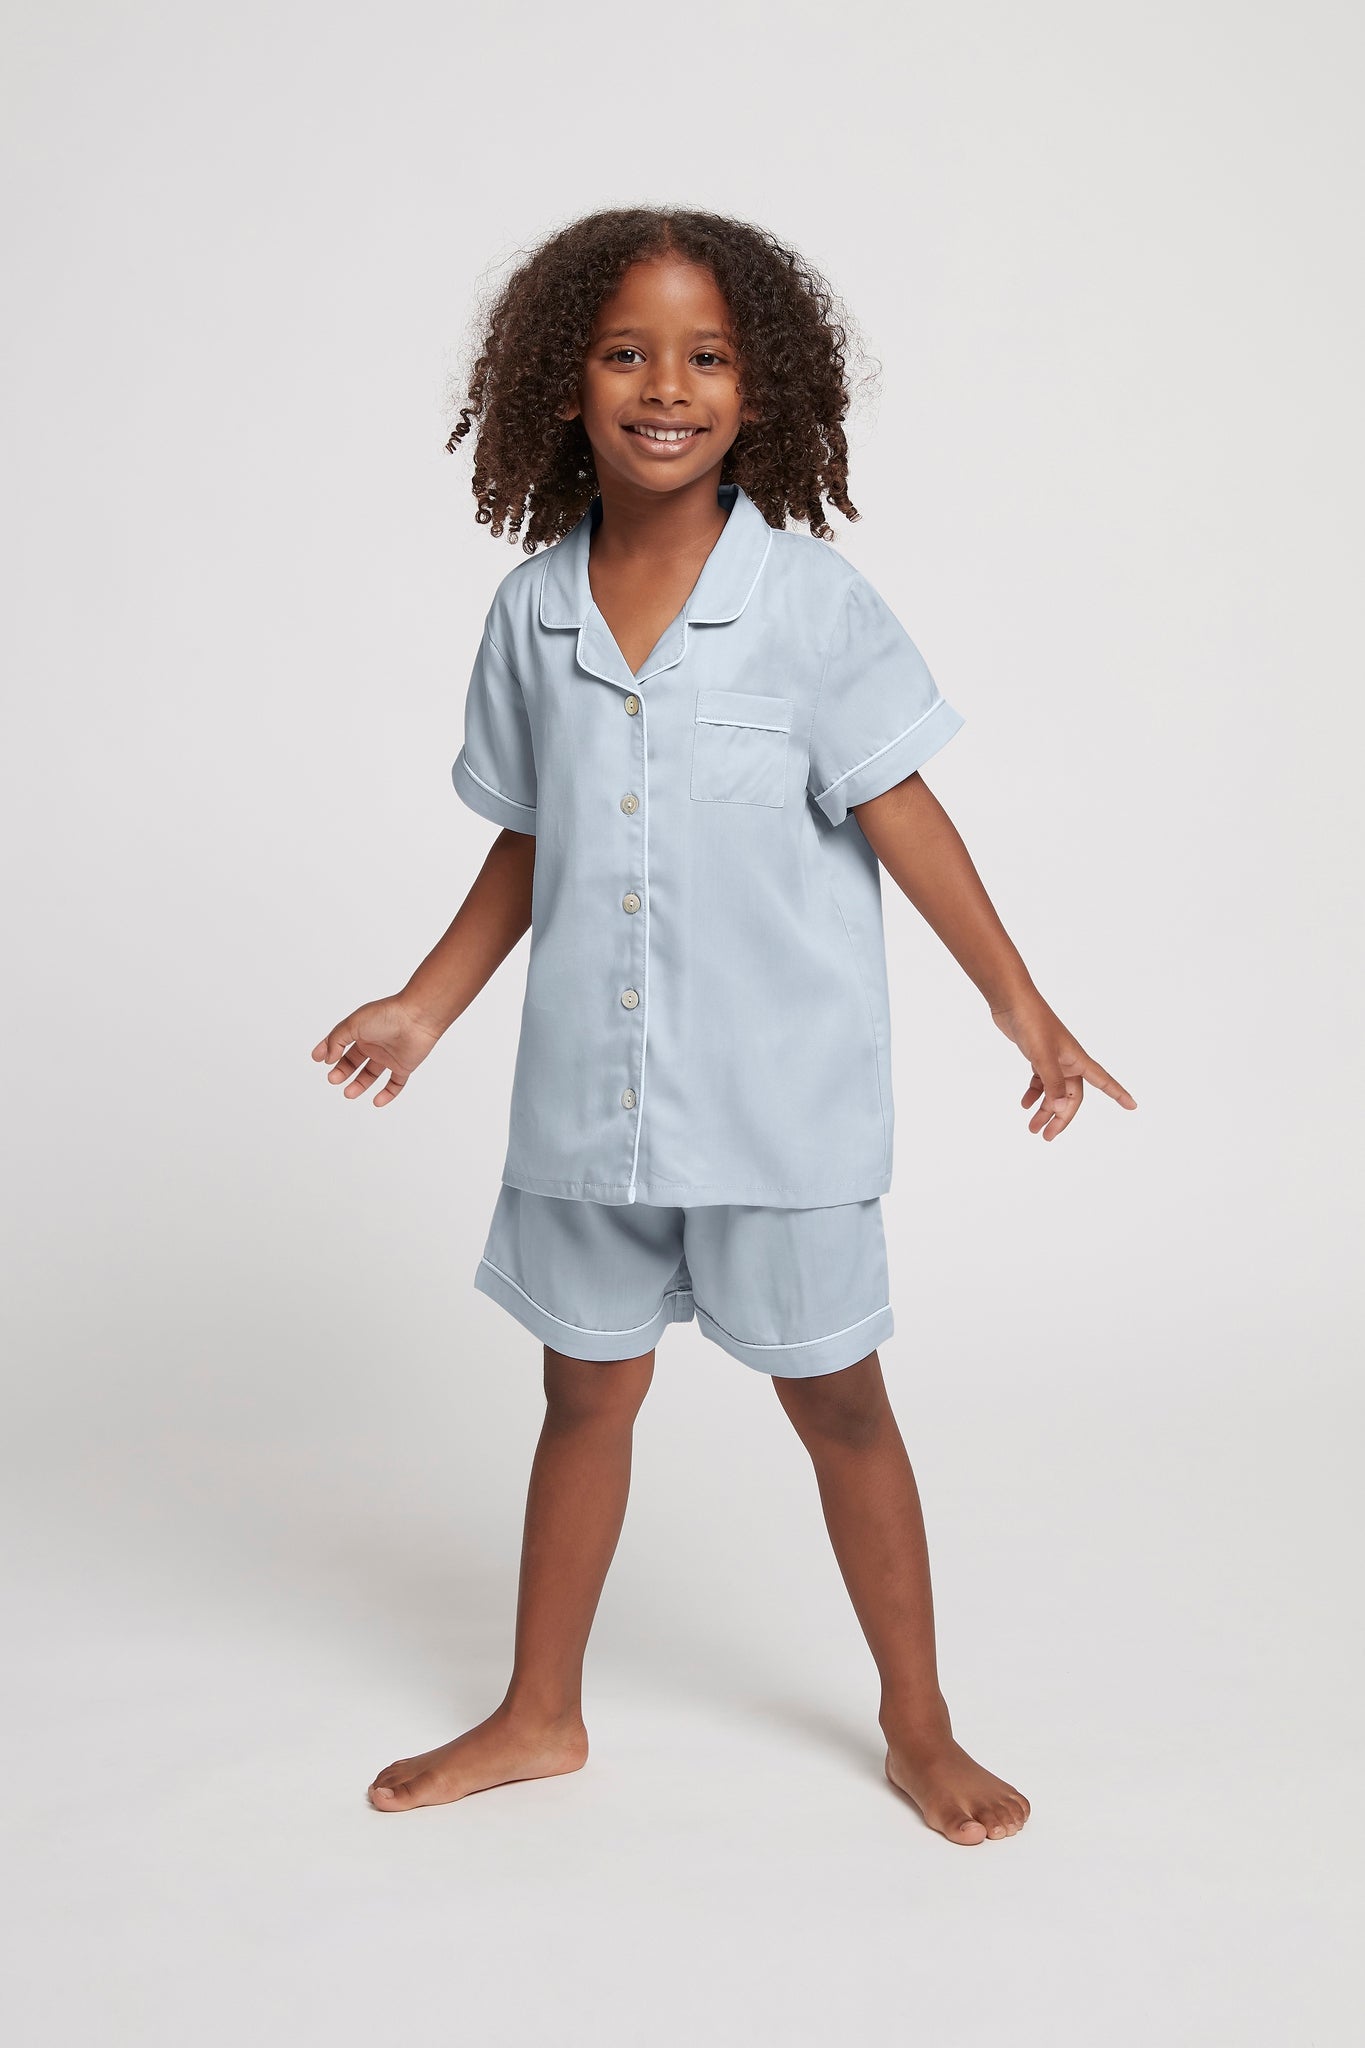 Omleiden alcohol levenslang Eva Kids Short TENCEL™ Pyjama Set - Eggshell Blue with White Piping